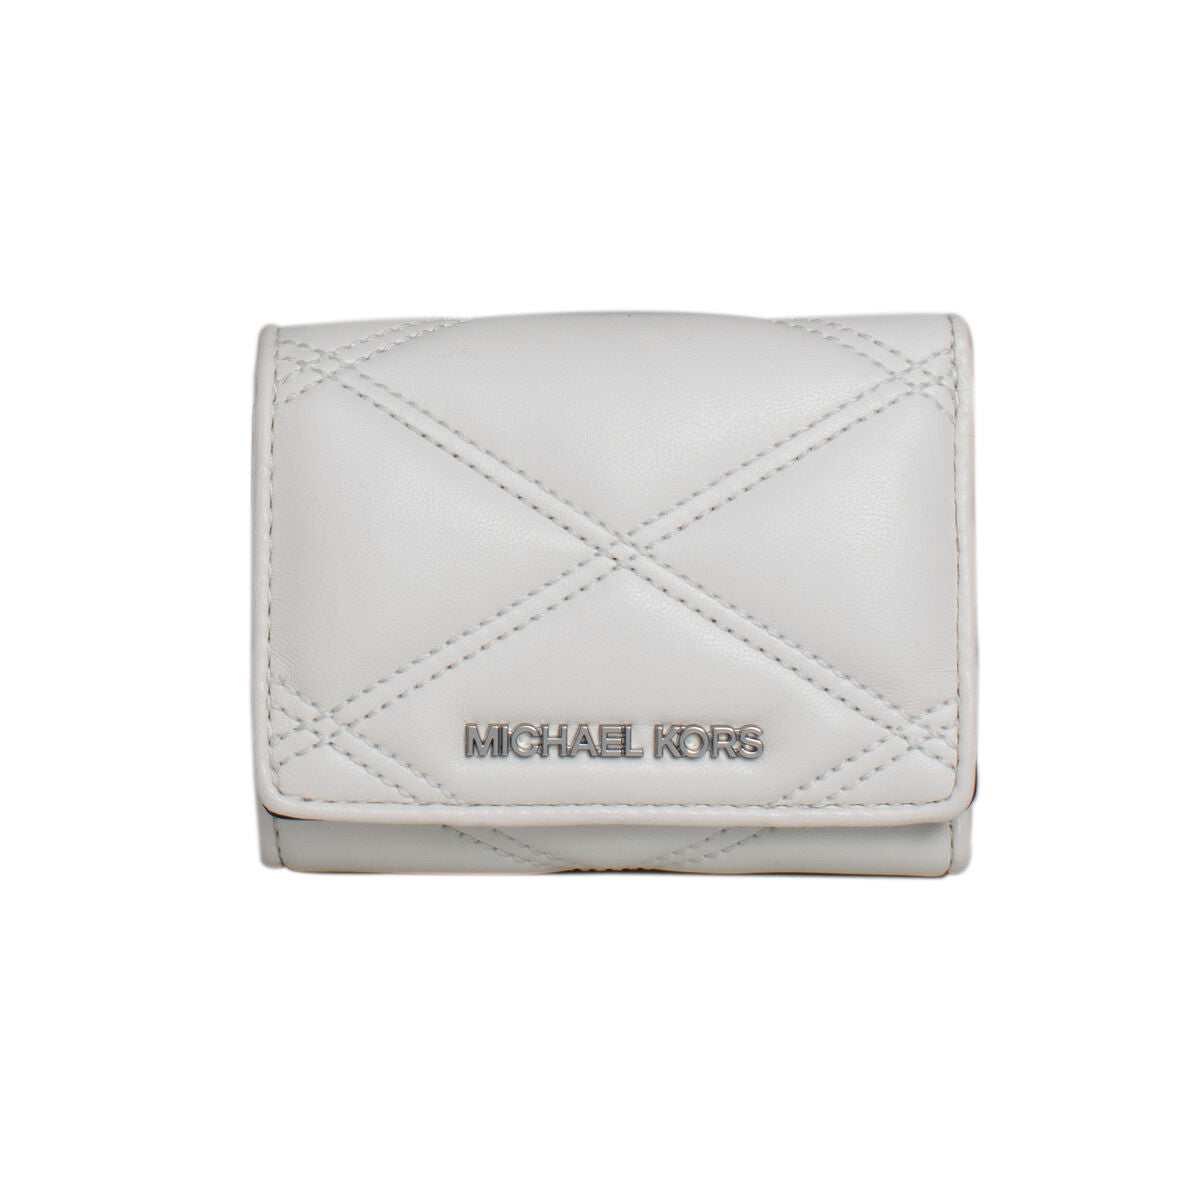 Michael Kors Bradshaw Optic White Leather Shoulder Bag 30S1S2BM2L085